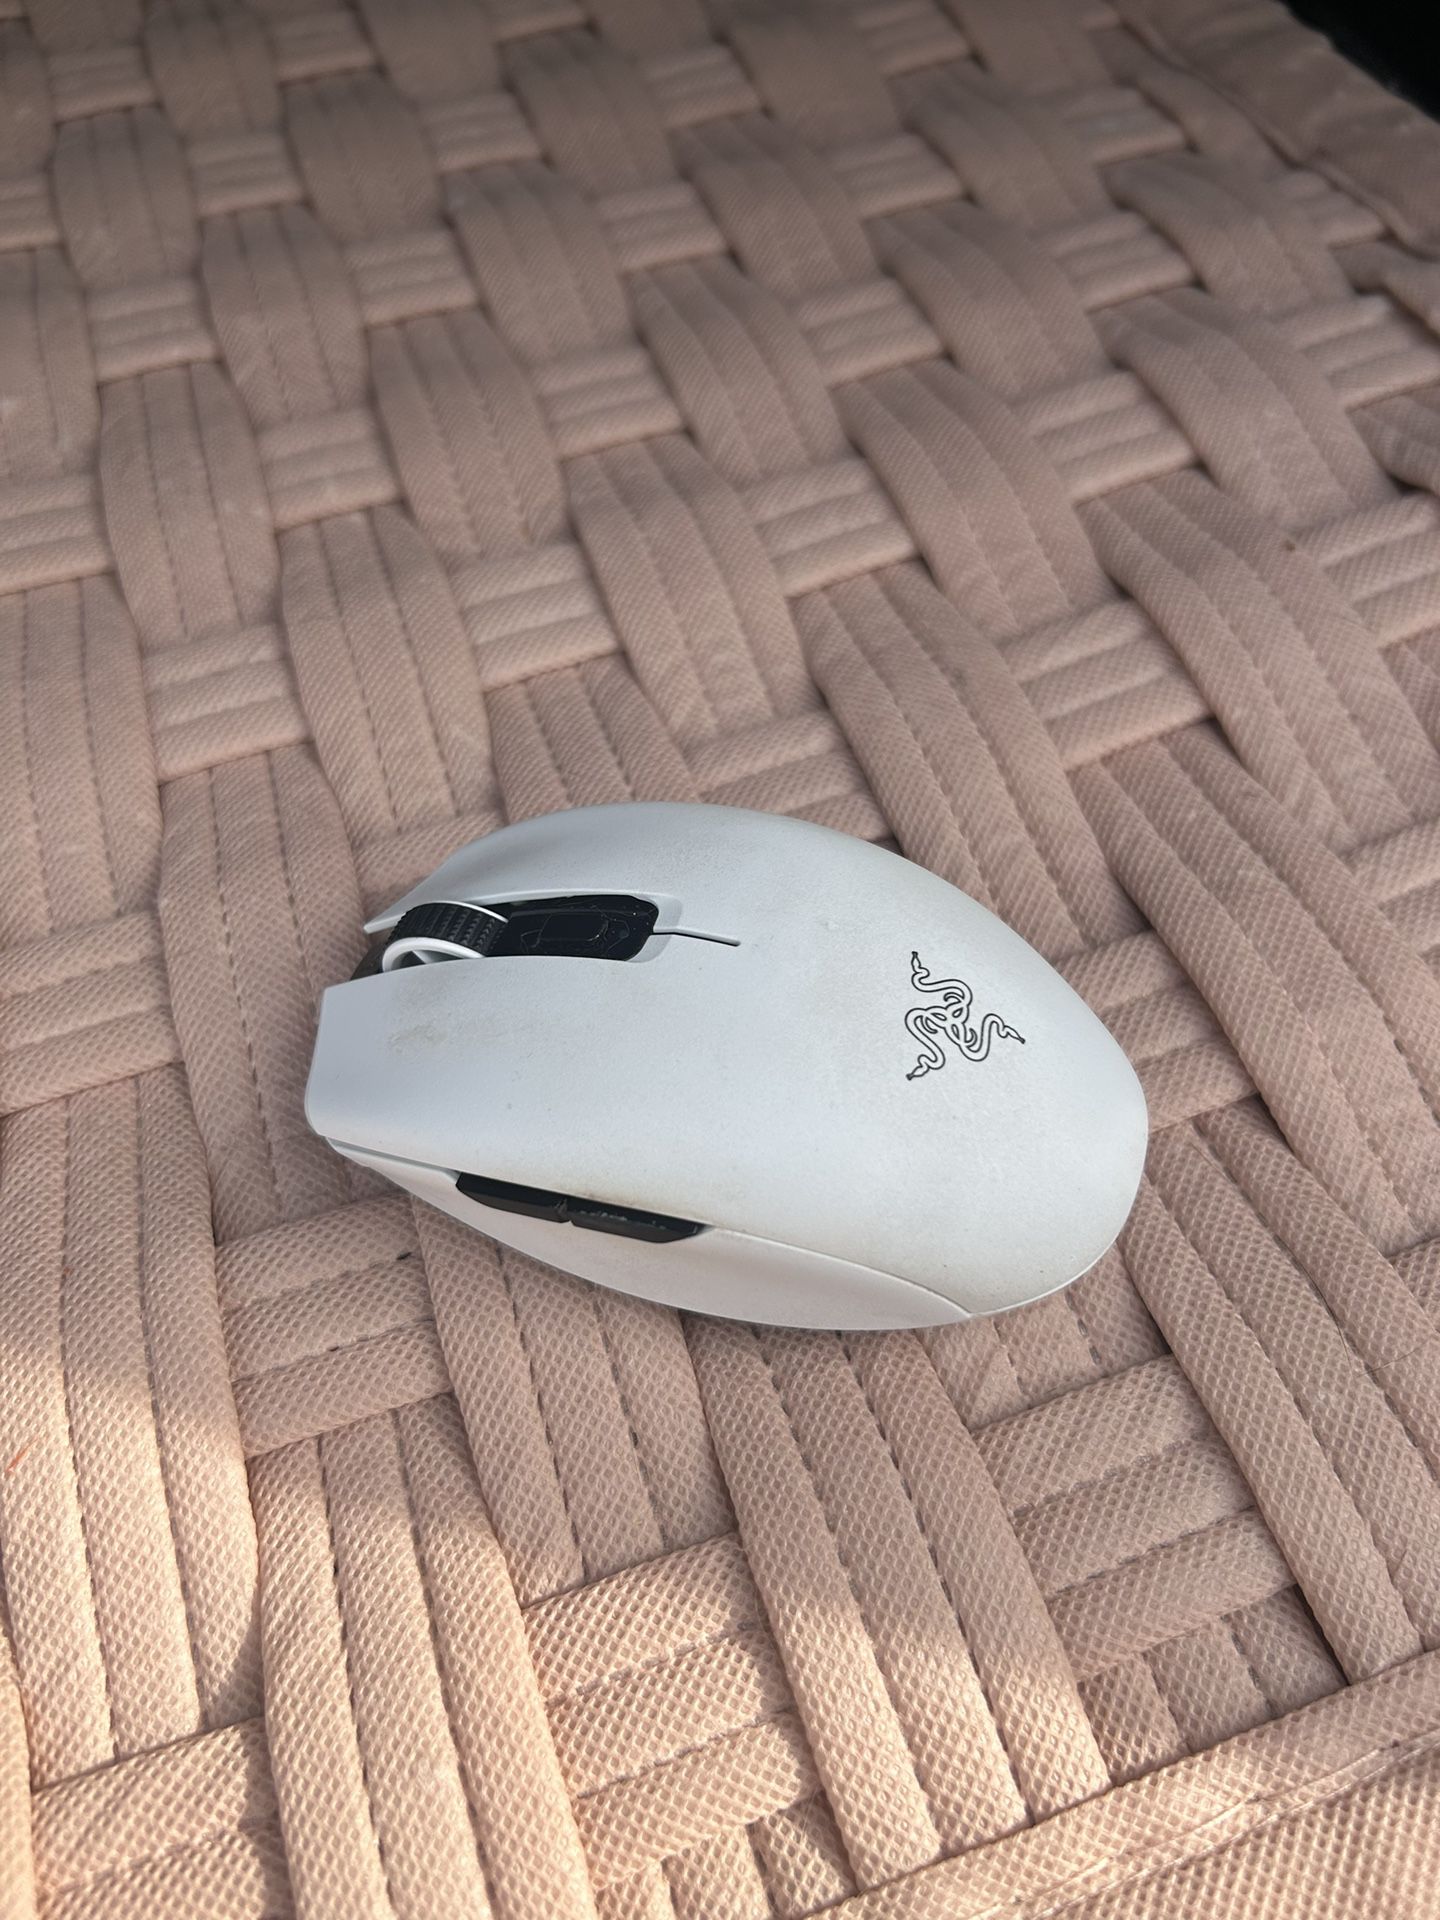 Razer Orchi Wireless Mouse